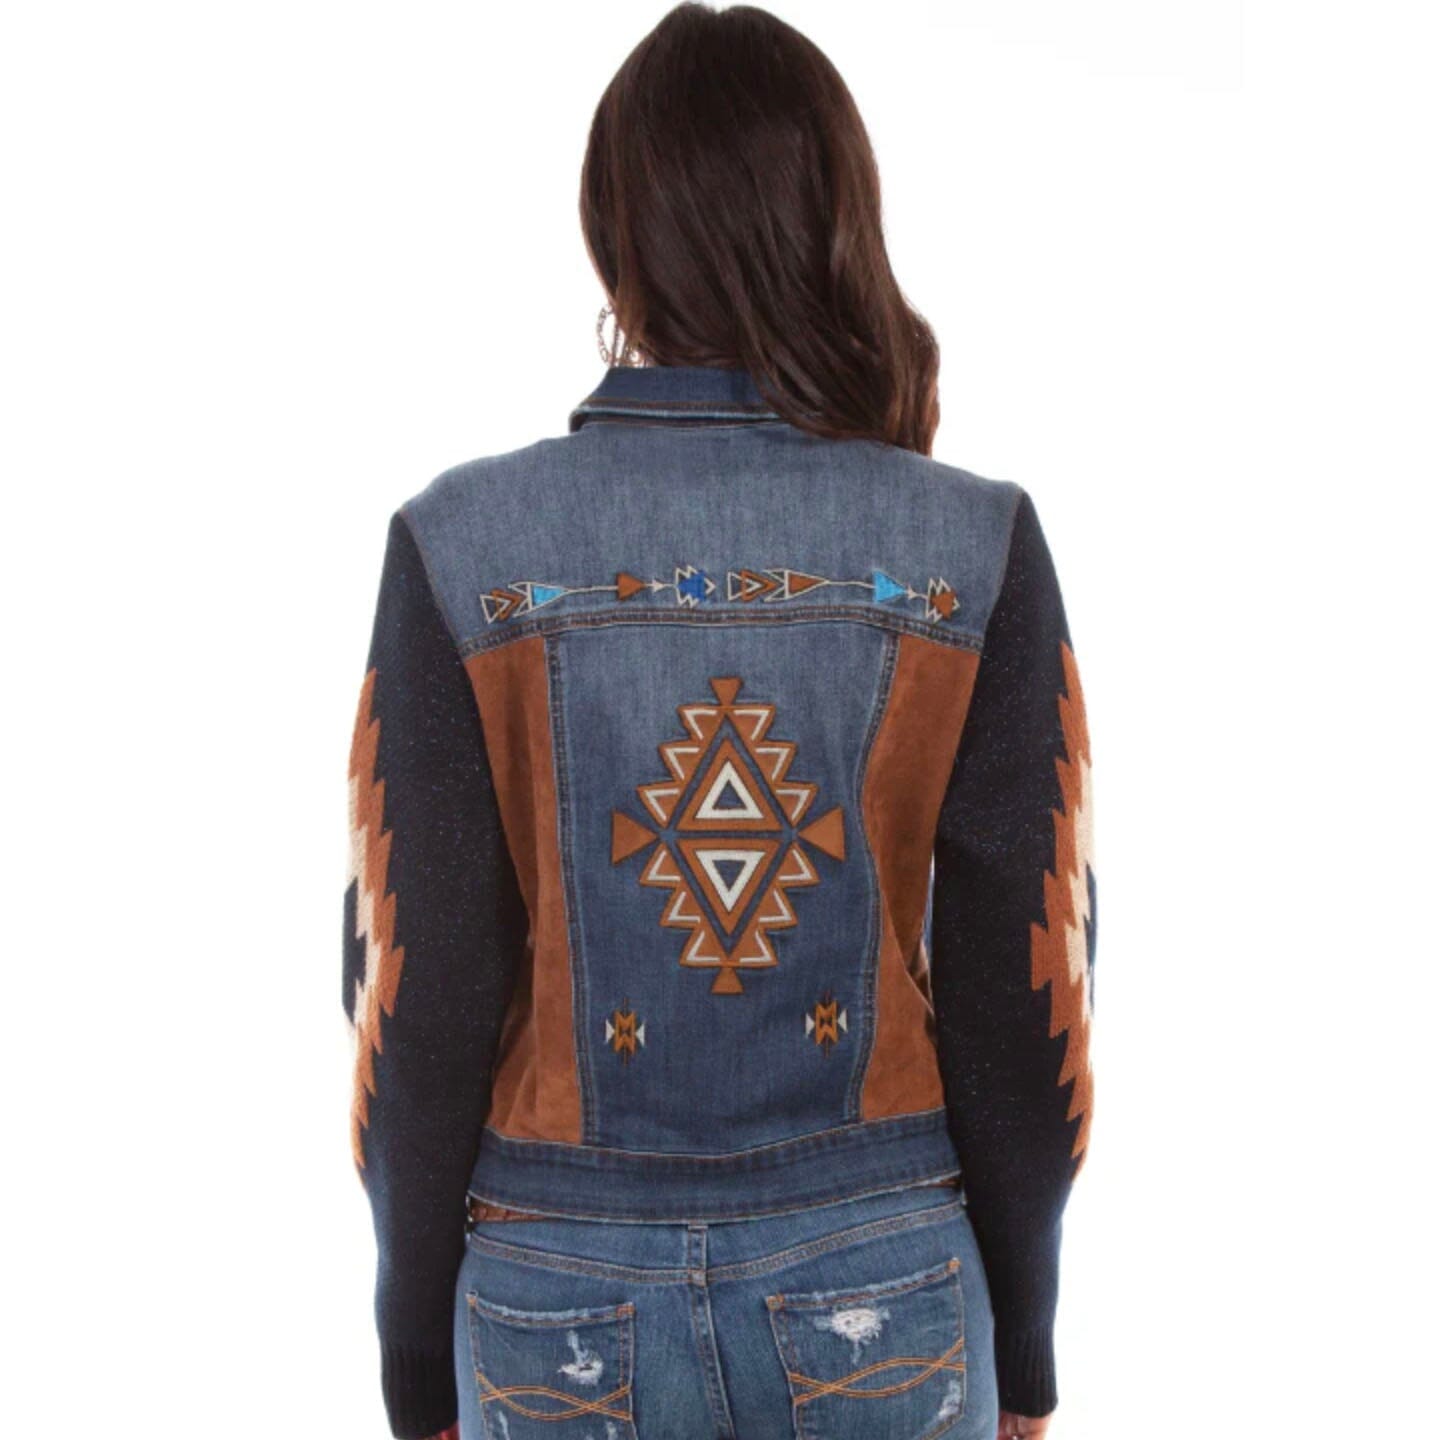 Aztec Embroidered Denim Jacket - JKSY6